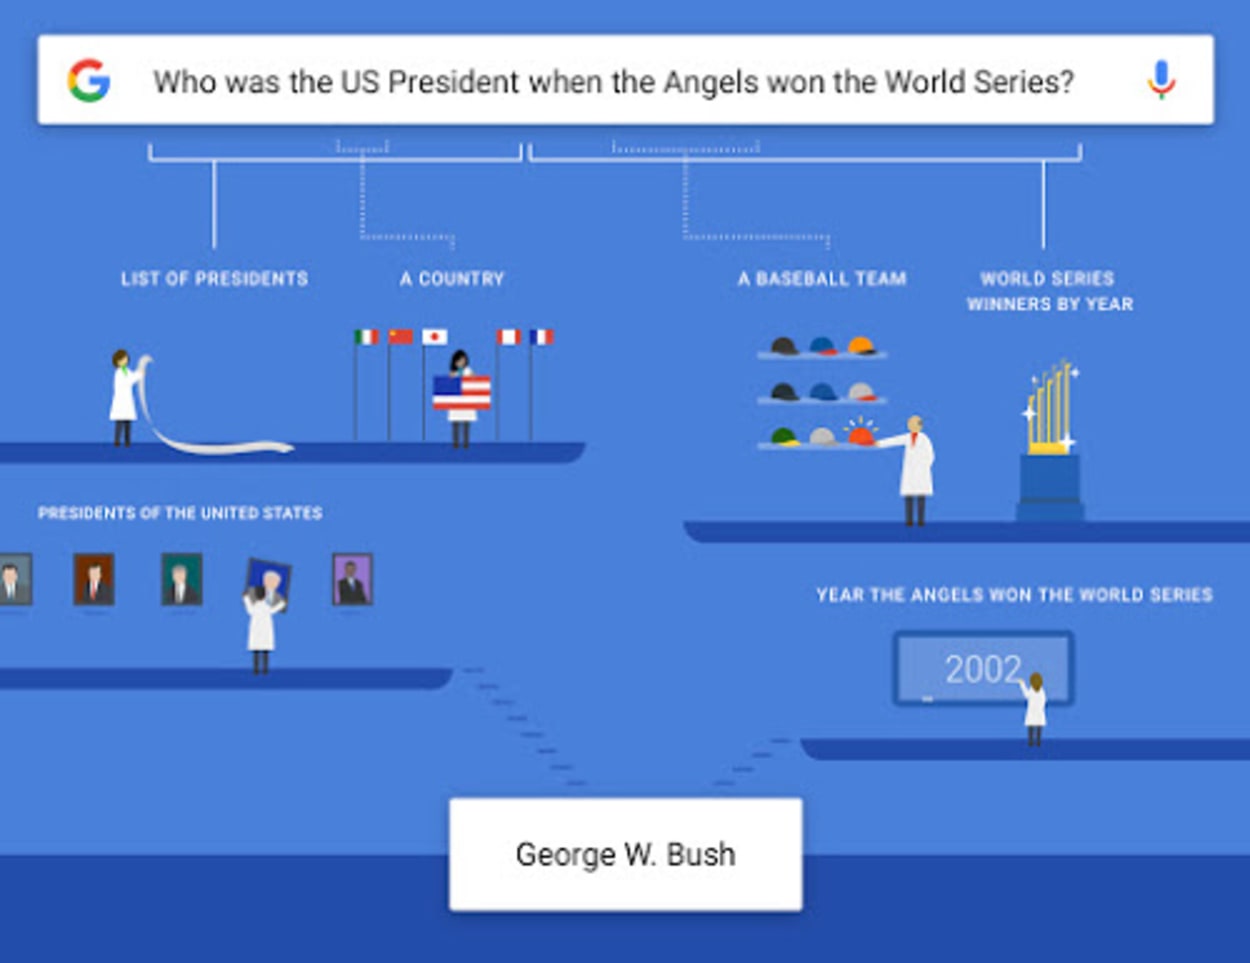 How the Google app understands complex questions.